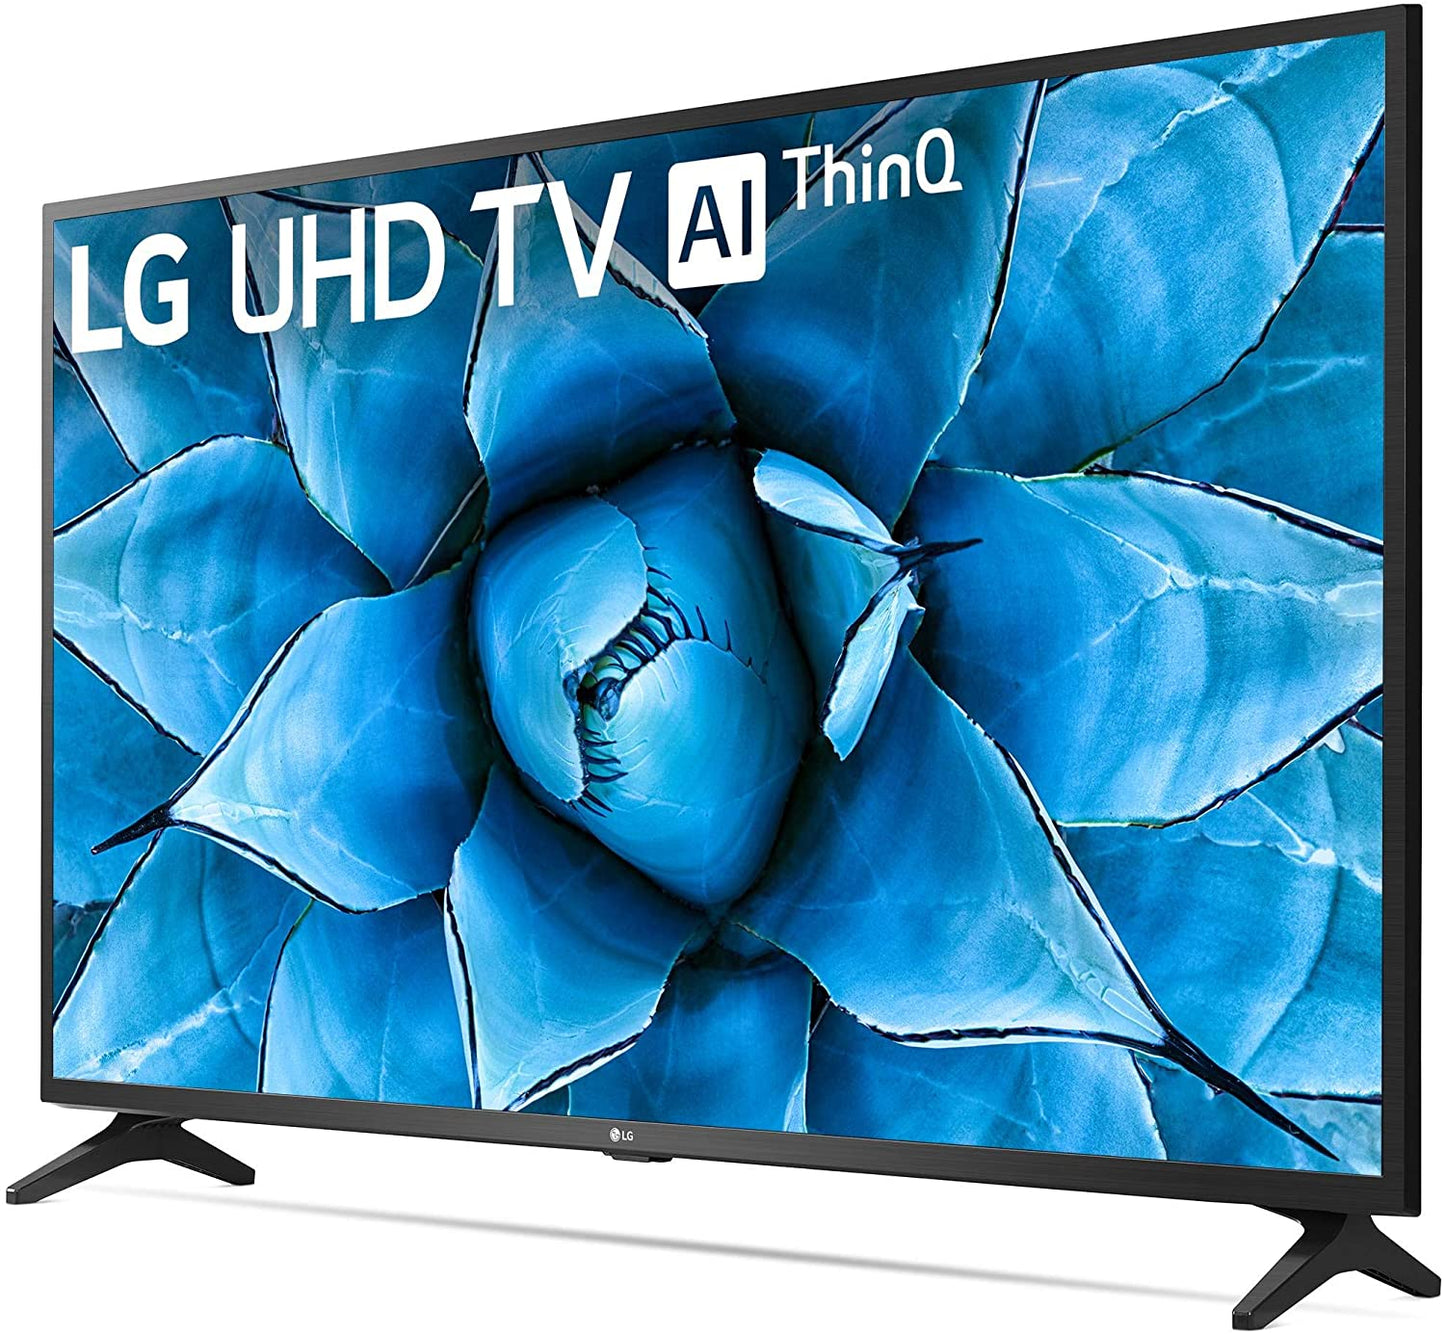 LG 50-in 4K UHD TM120 ThinQ AI LED TV W/ Quad Core Intelligent Processor